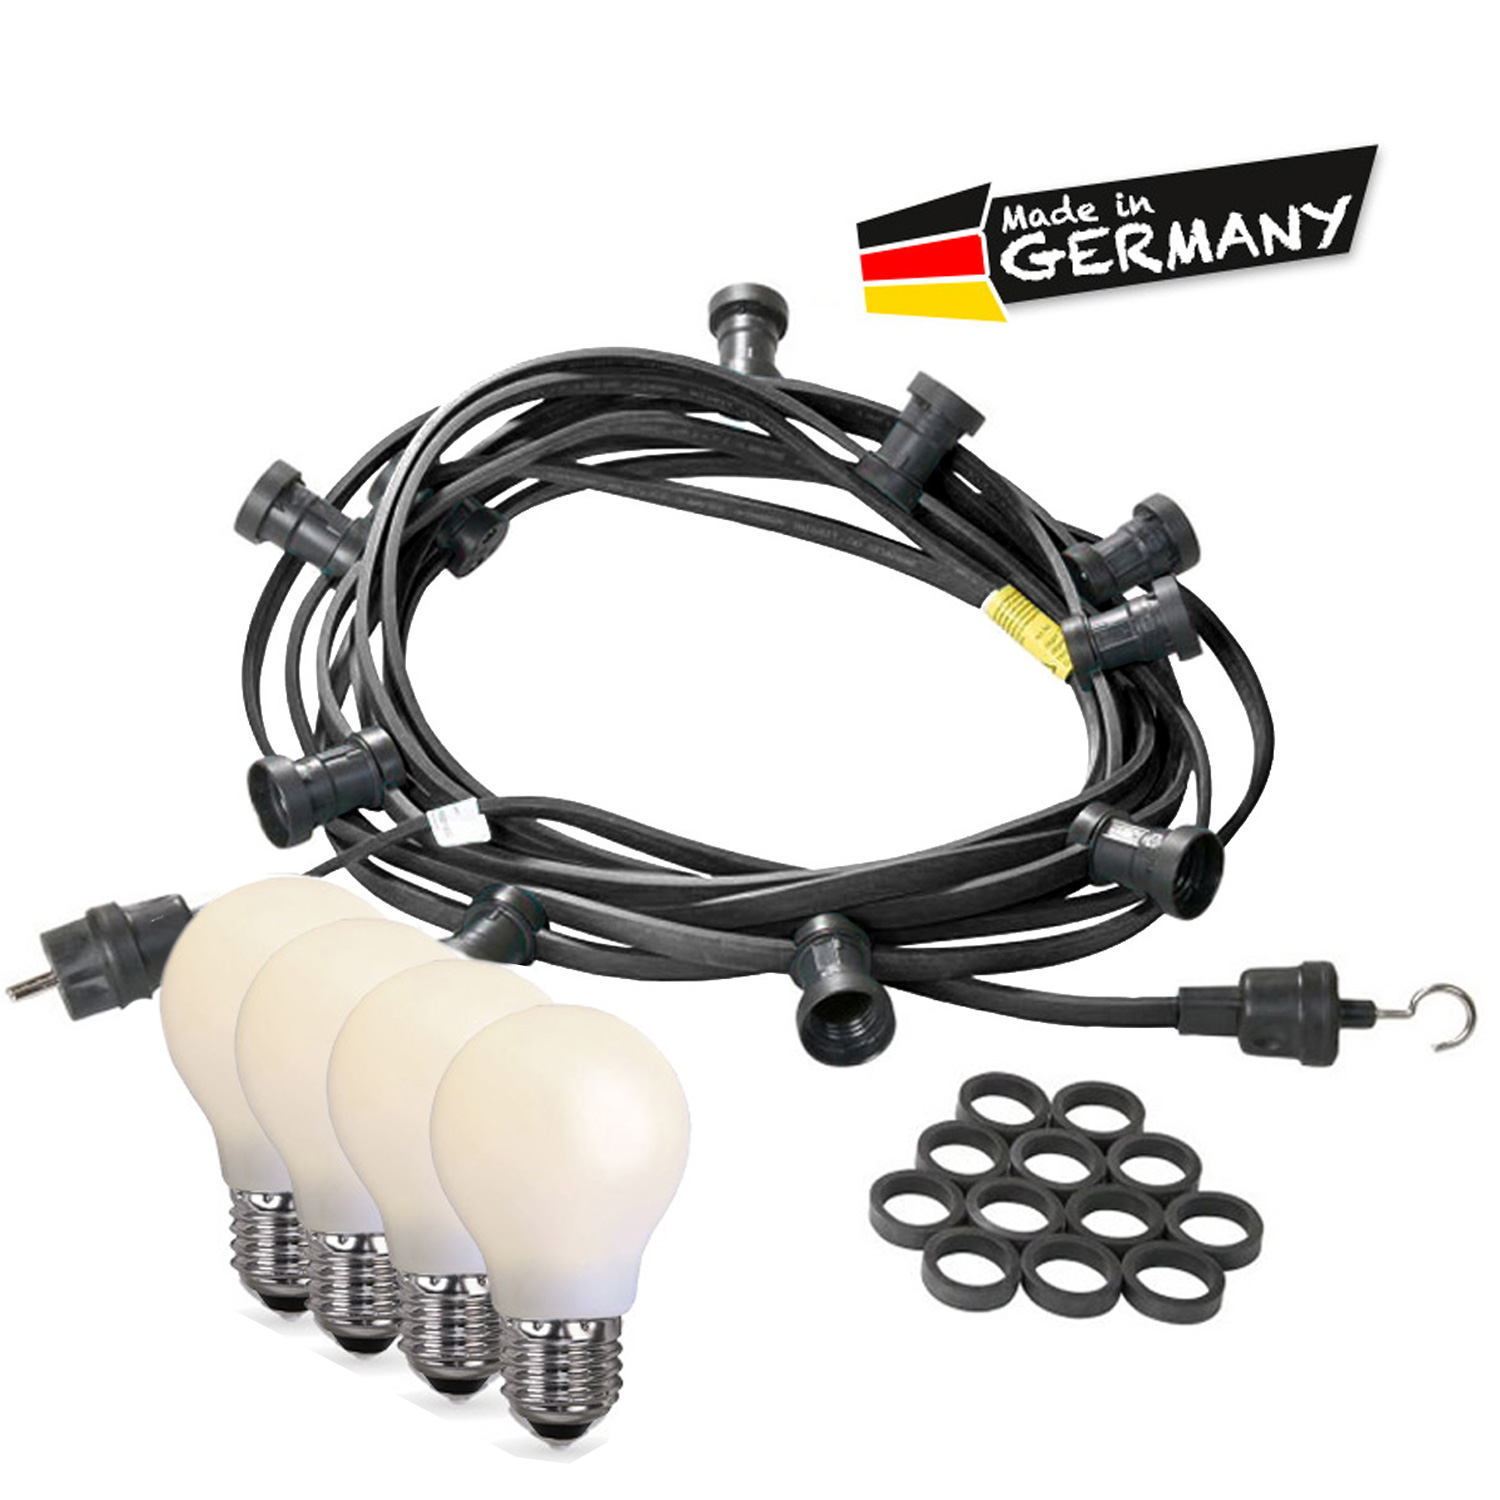 Illu-/Partylichterkette 5m - Außen - schwarz - Made in Germany- 5 bruchfeste opale LED Tropfenlampen